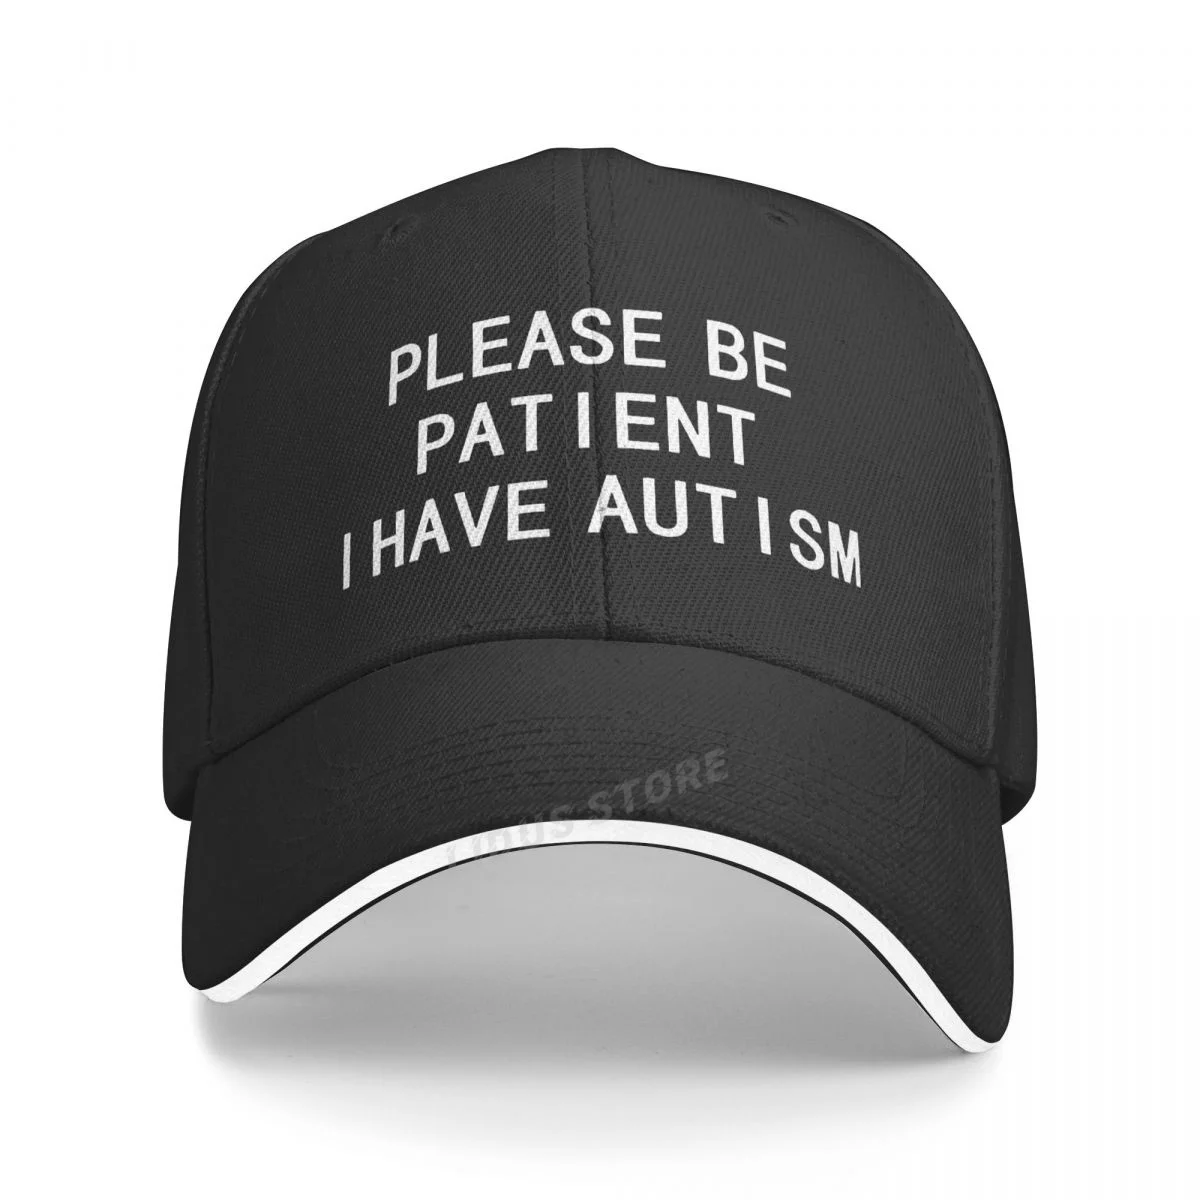 Please Be Patient I Have Autism Letter Print Baseball Cap Outdoor Men Women Autistic Patient Hats Adjustable Snapback Hats